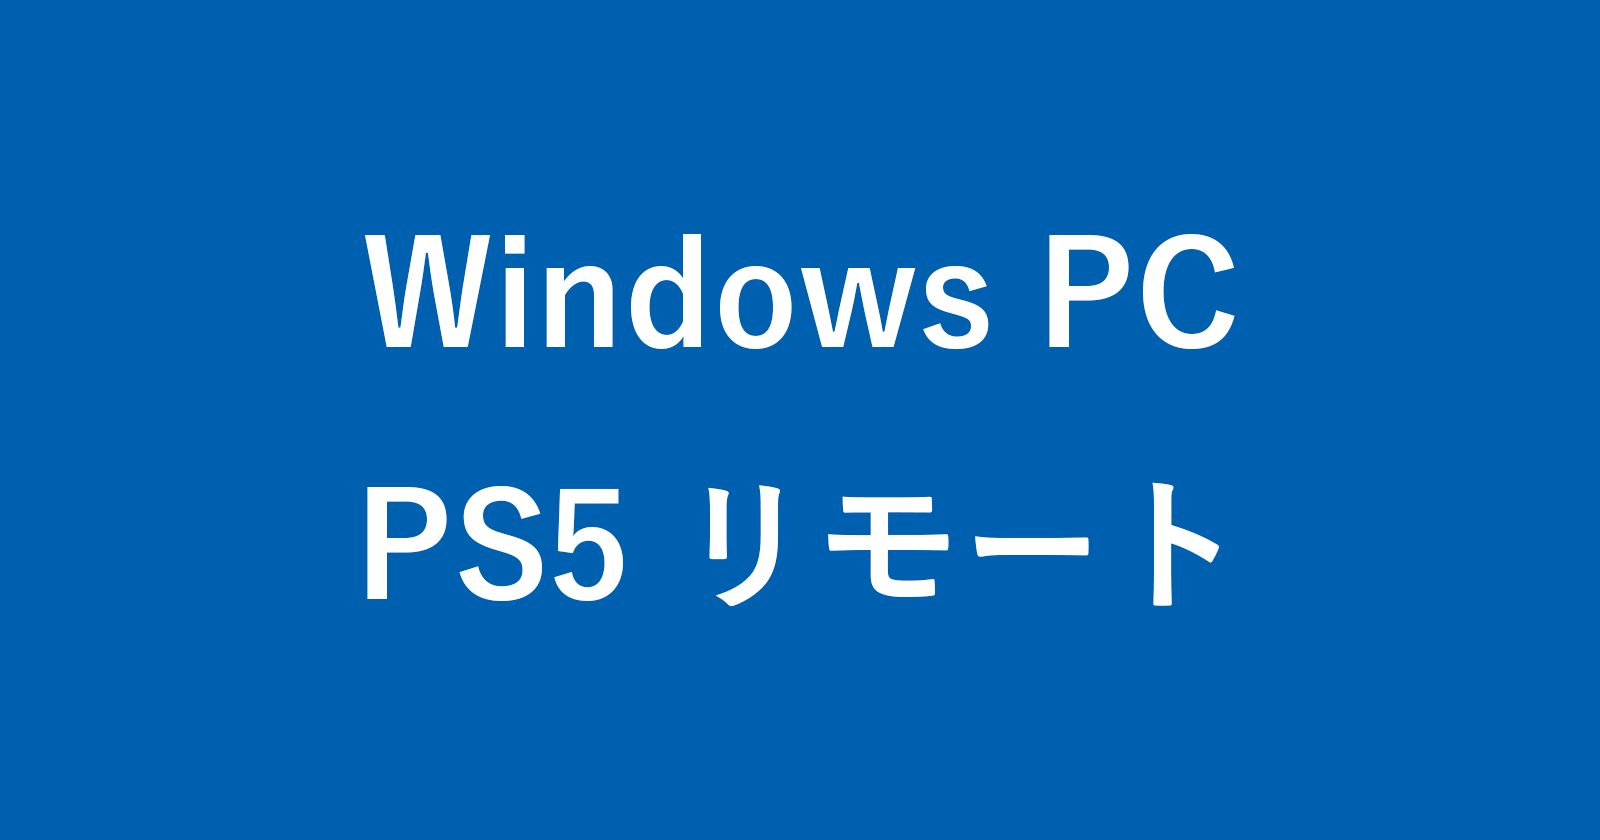 ps5 windows pc remote play